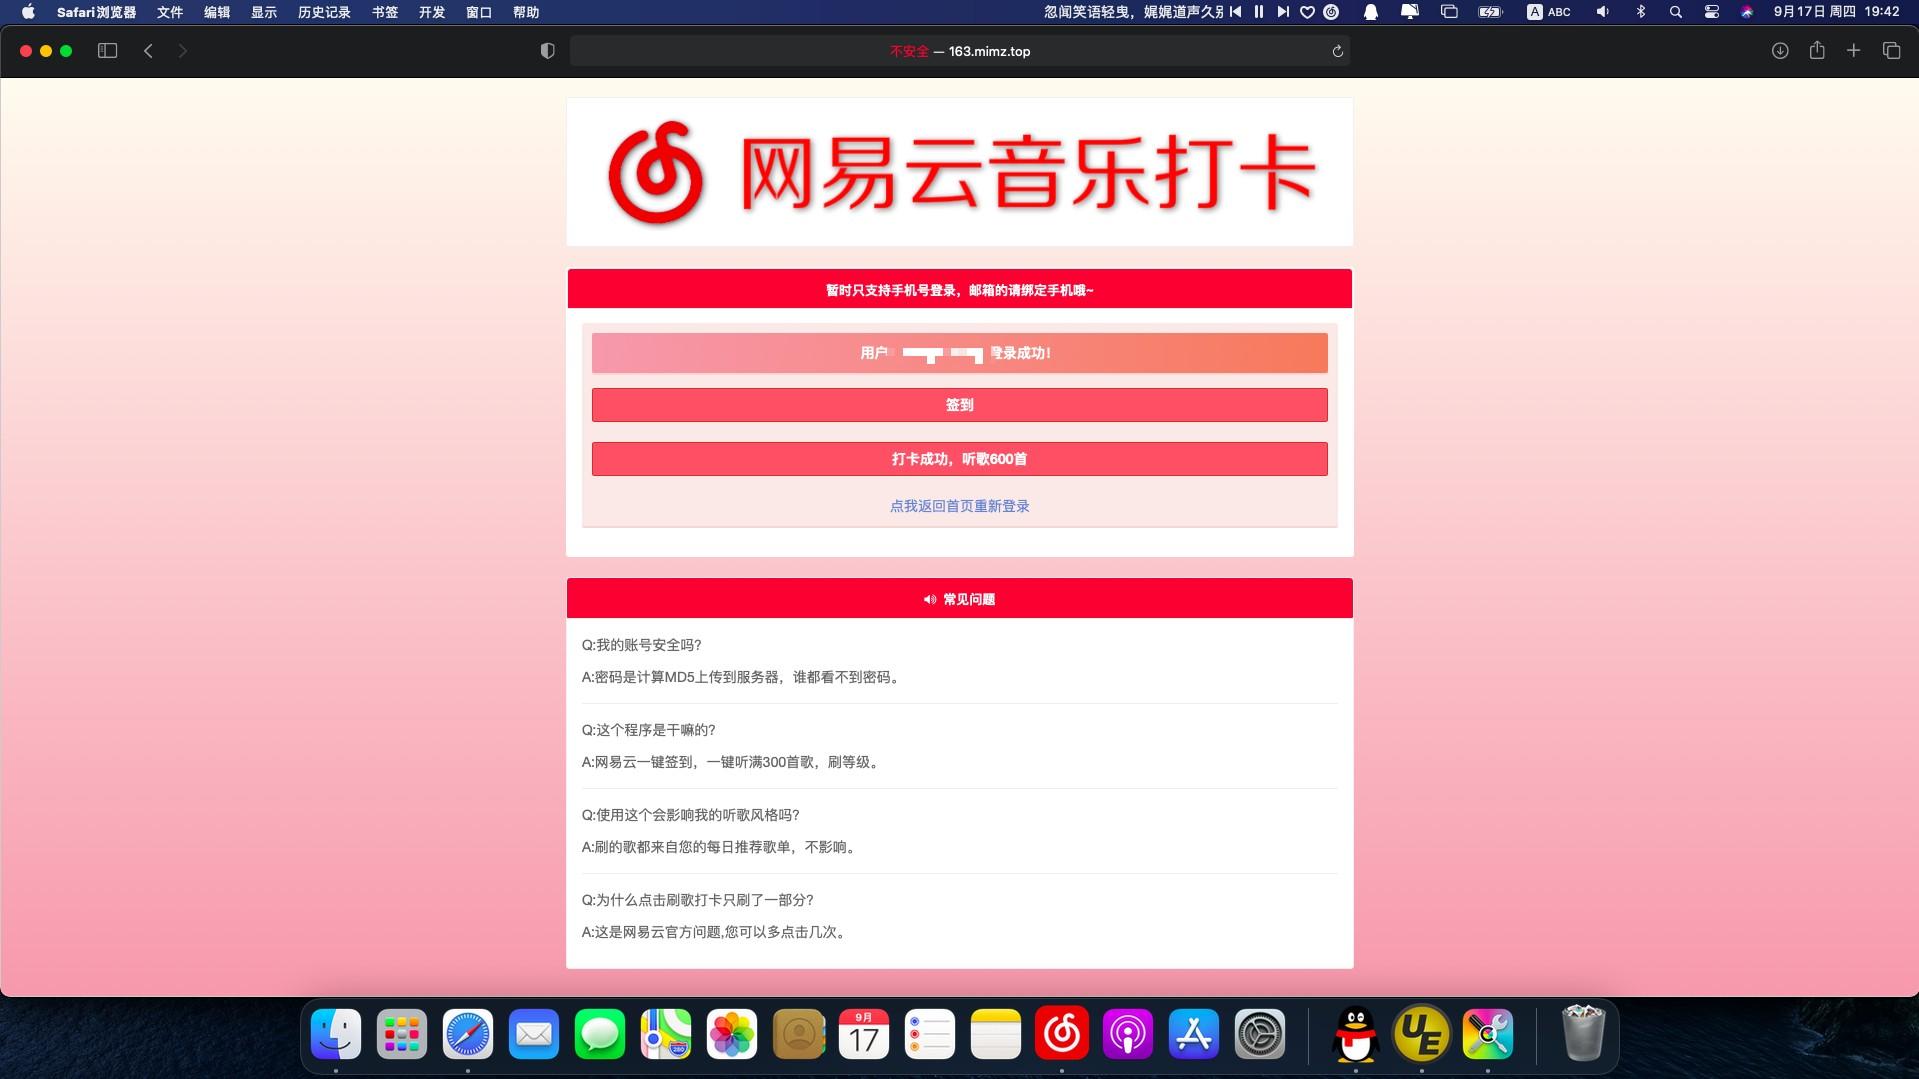  NetEase Cloud One Click Full 300 Songs Source Code - Repair Version